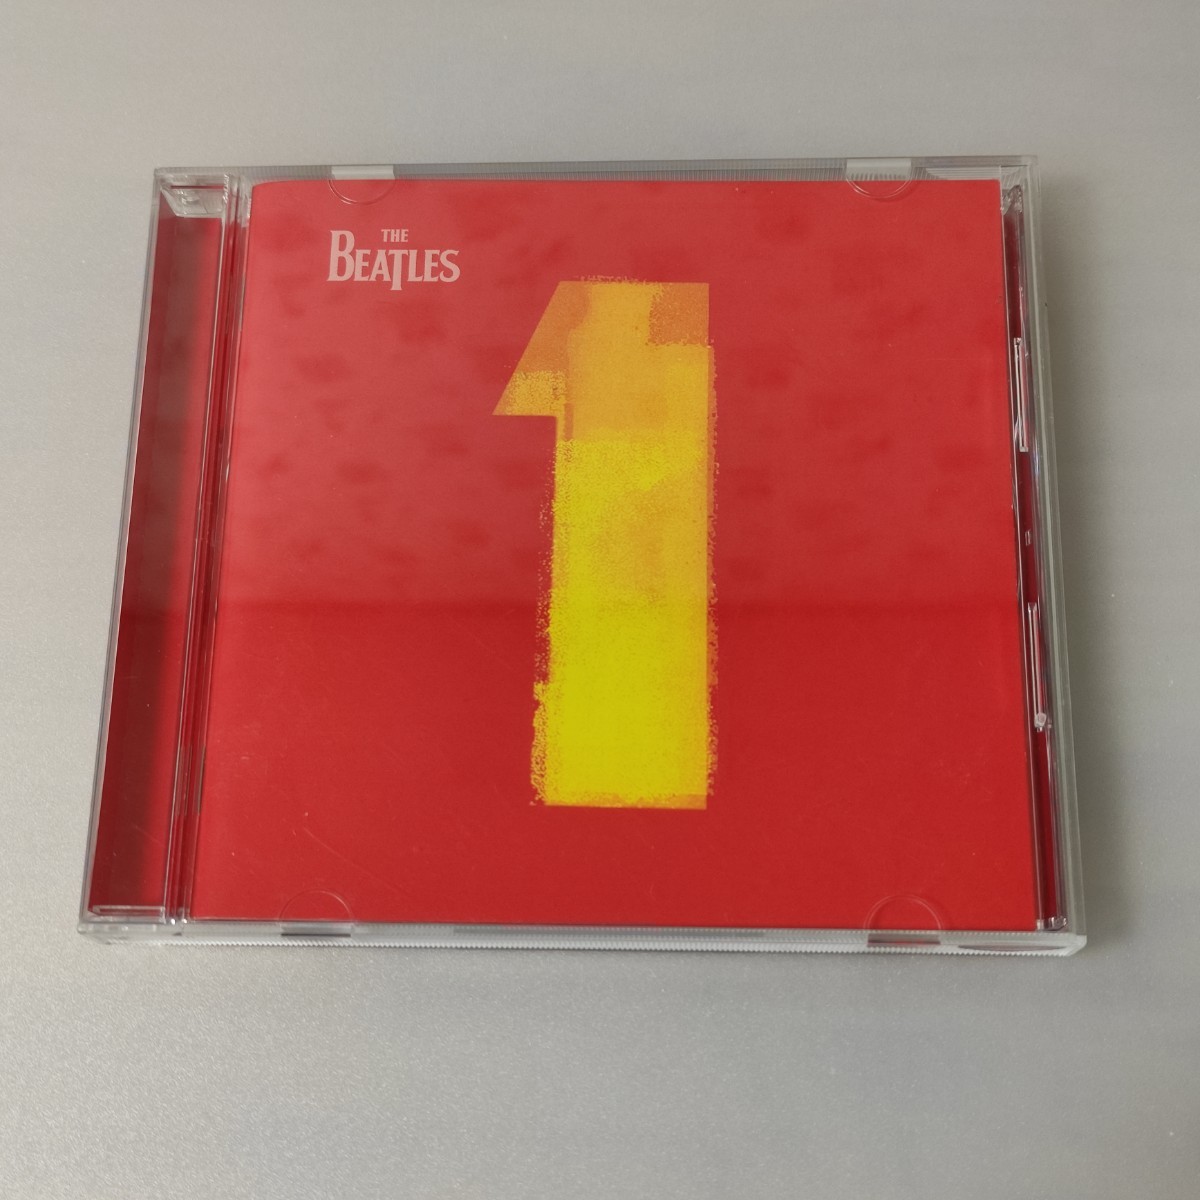 THE BEATLES 1 ザ・ビートルズ 1